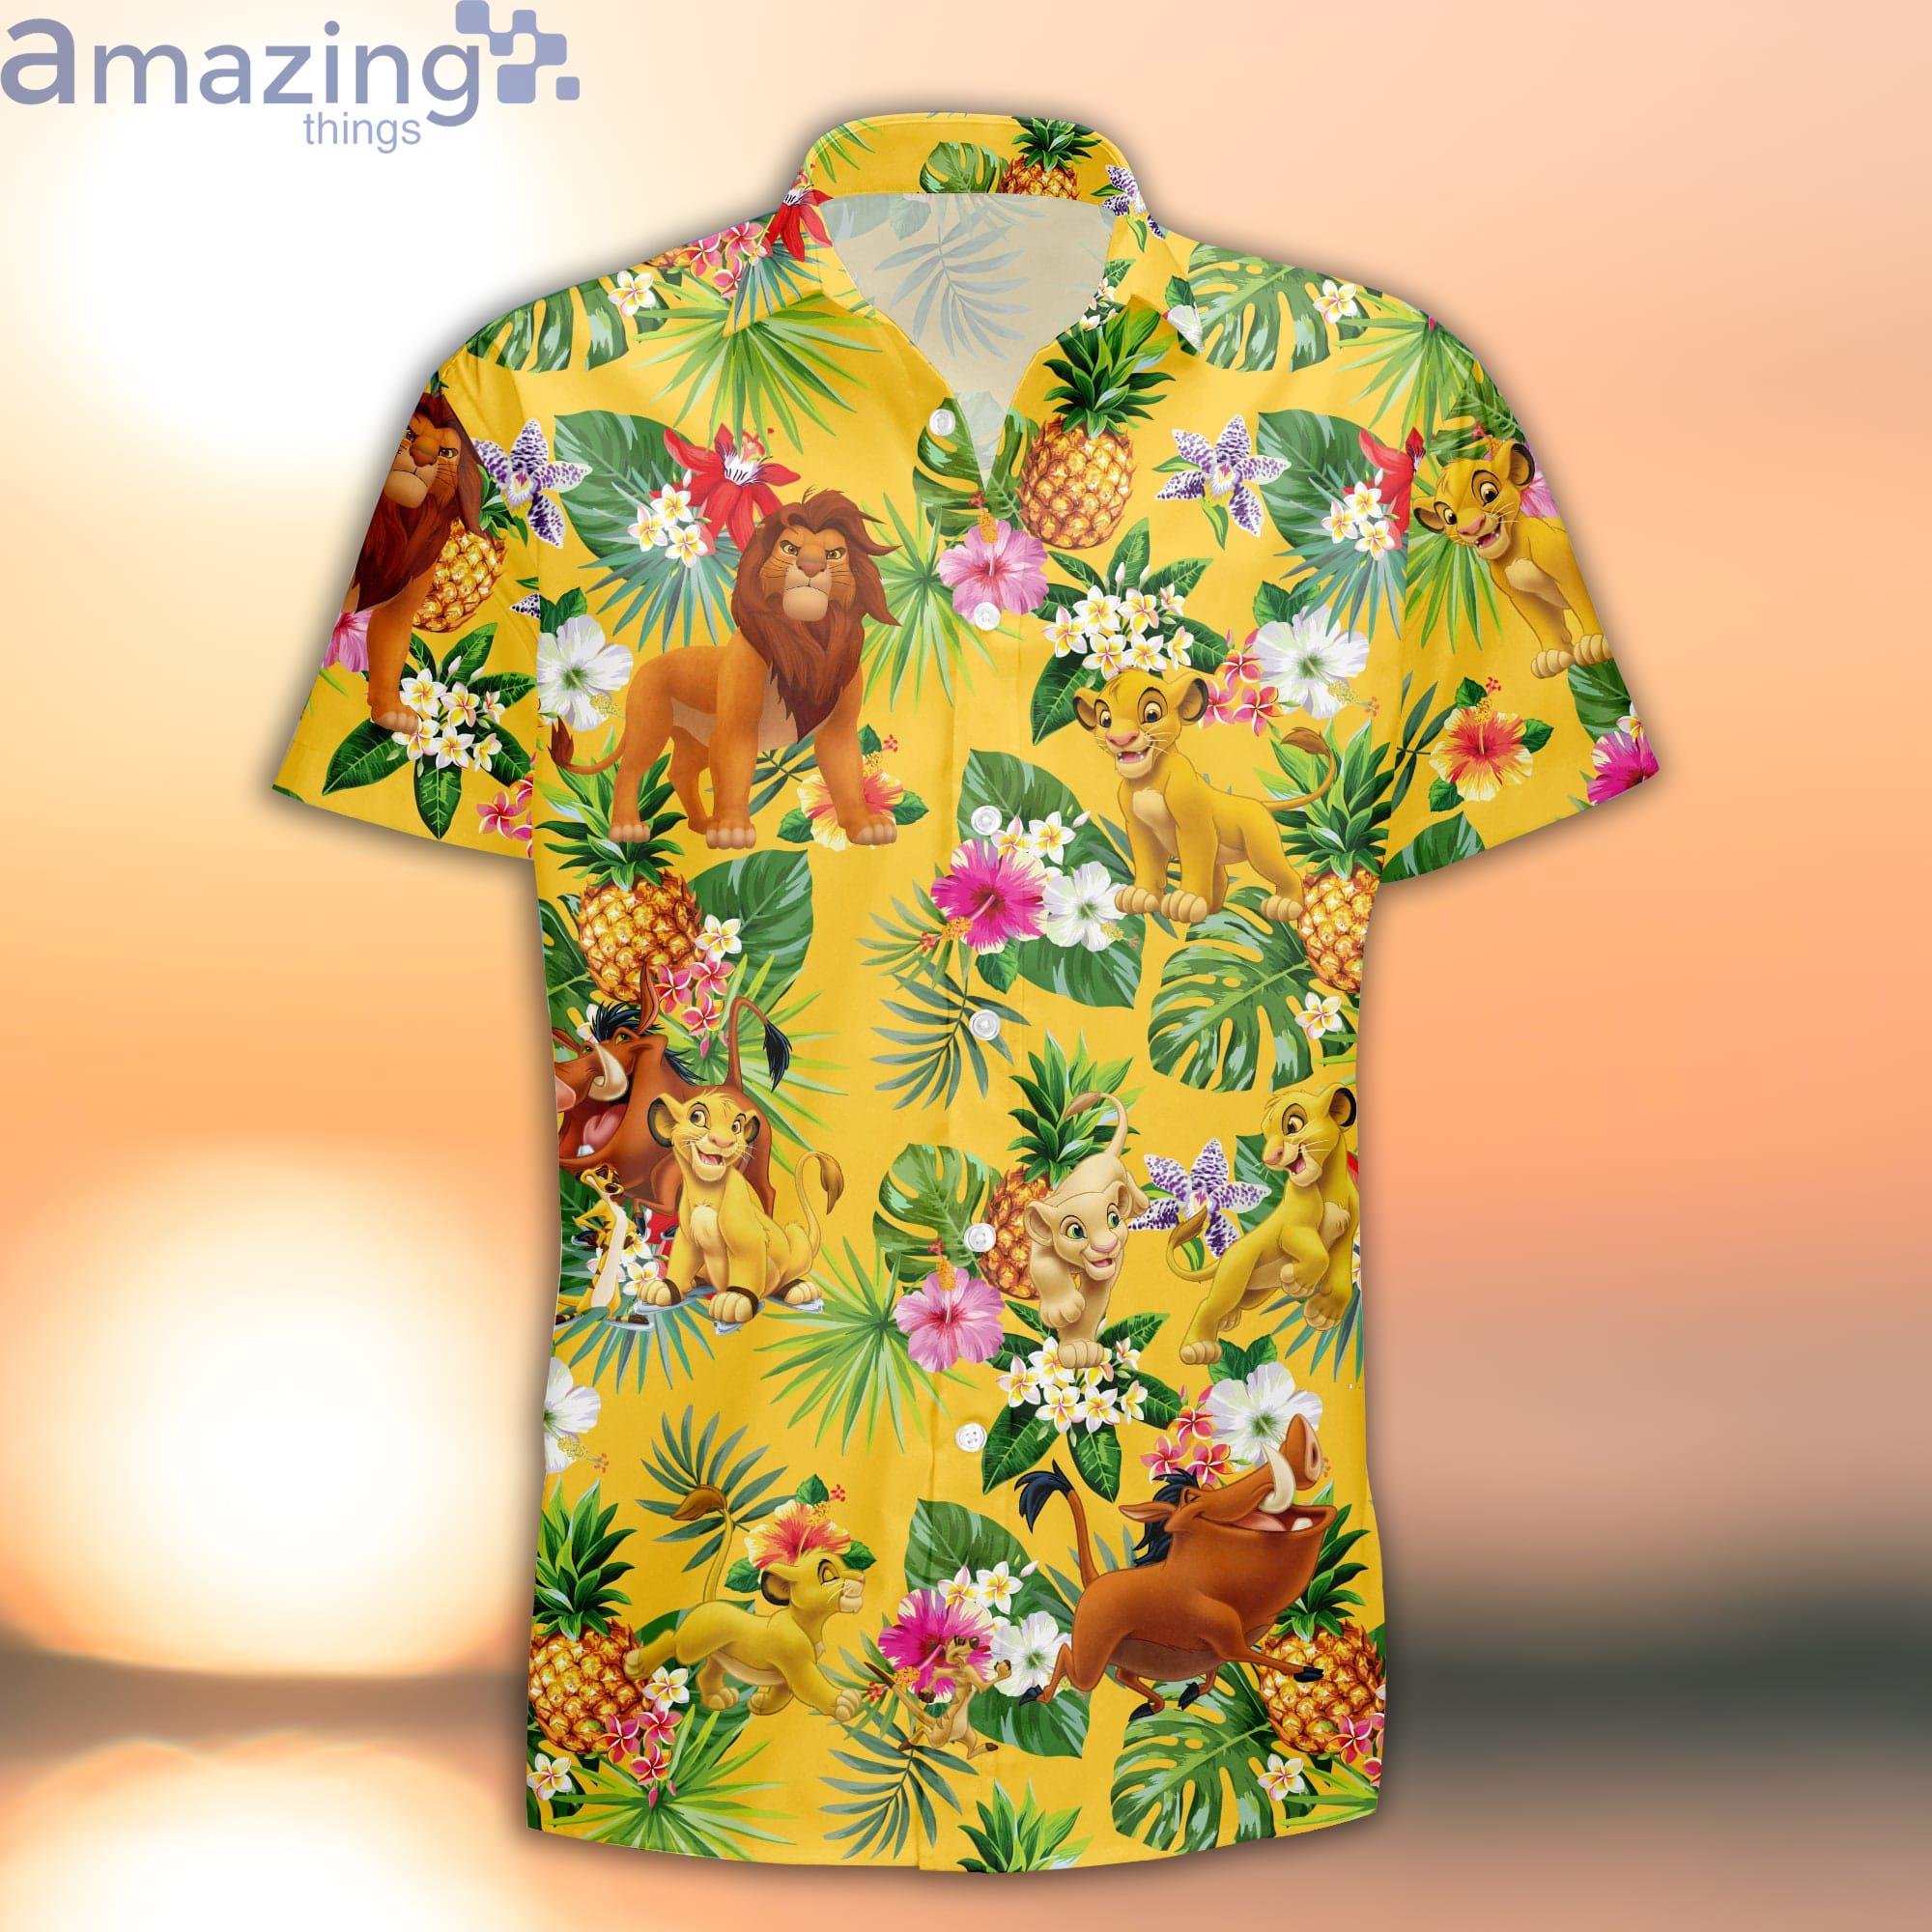 Simba Lion King Yellow Green Leaf Patterns Summer Tropical Disney Hawaiian Shirt Product Photo 1